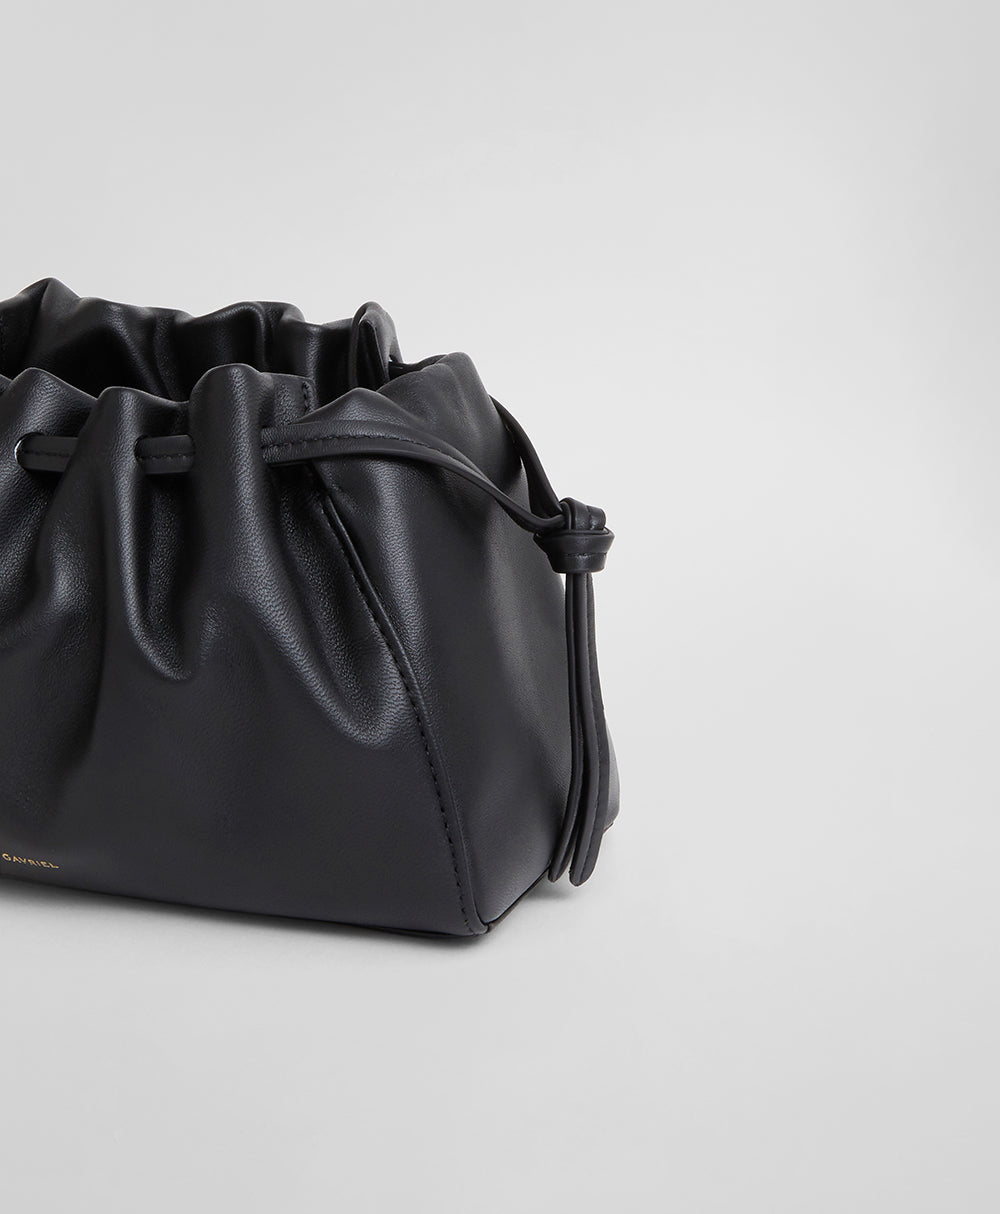 Mansur Gavriel - MG Mini Lady Bag in Flamma calf leather